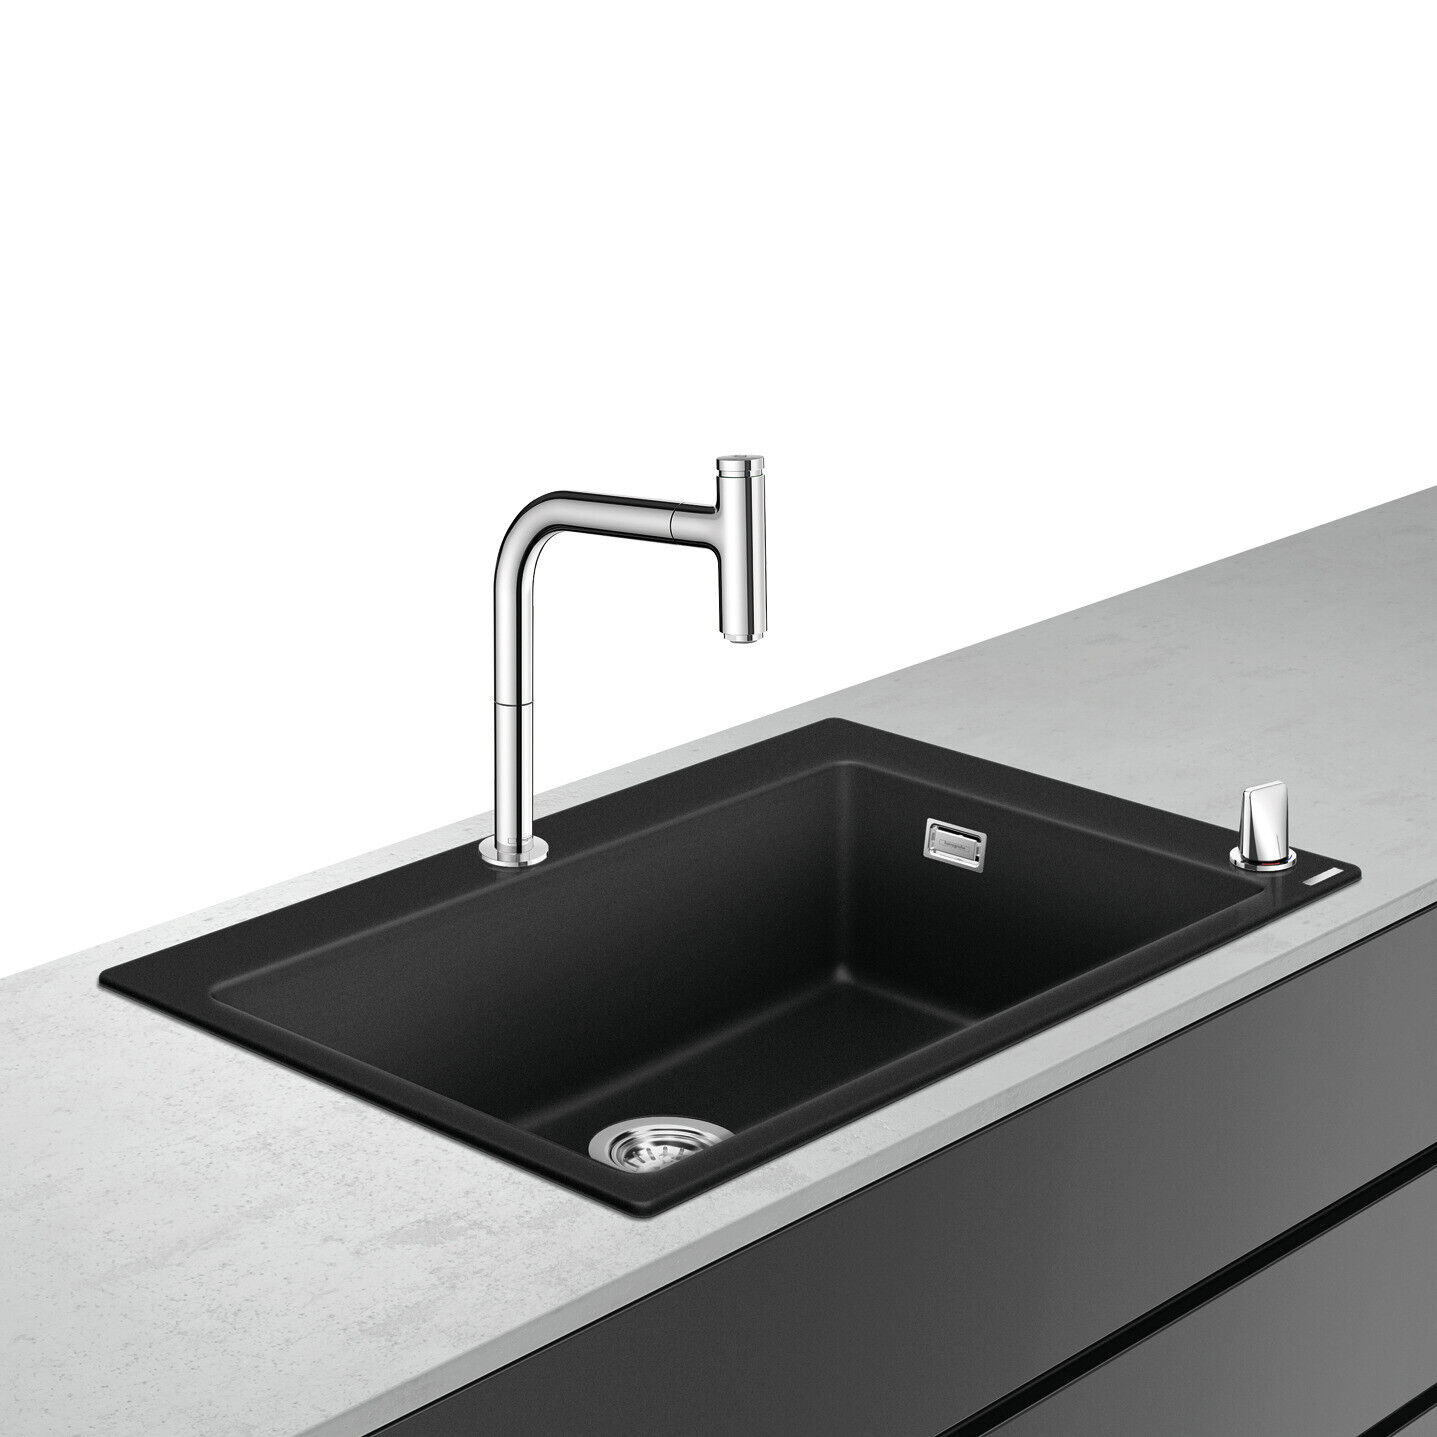 Chiuvete bucatarie - Set Hansgrohe Sink Combi 660, C51-F660-07, chiuveta SilicaTec 77x51 cm cu 1 cuva, graphite black si baterie cu doua elemente si dus extractibil, laguna.ro